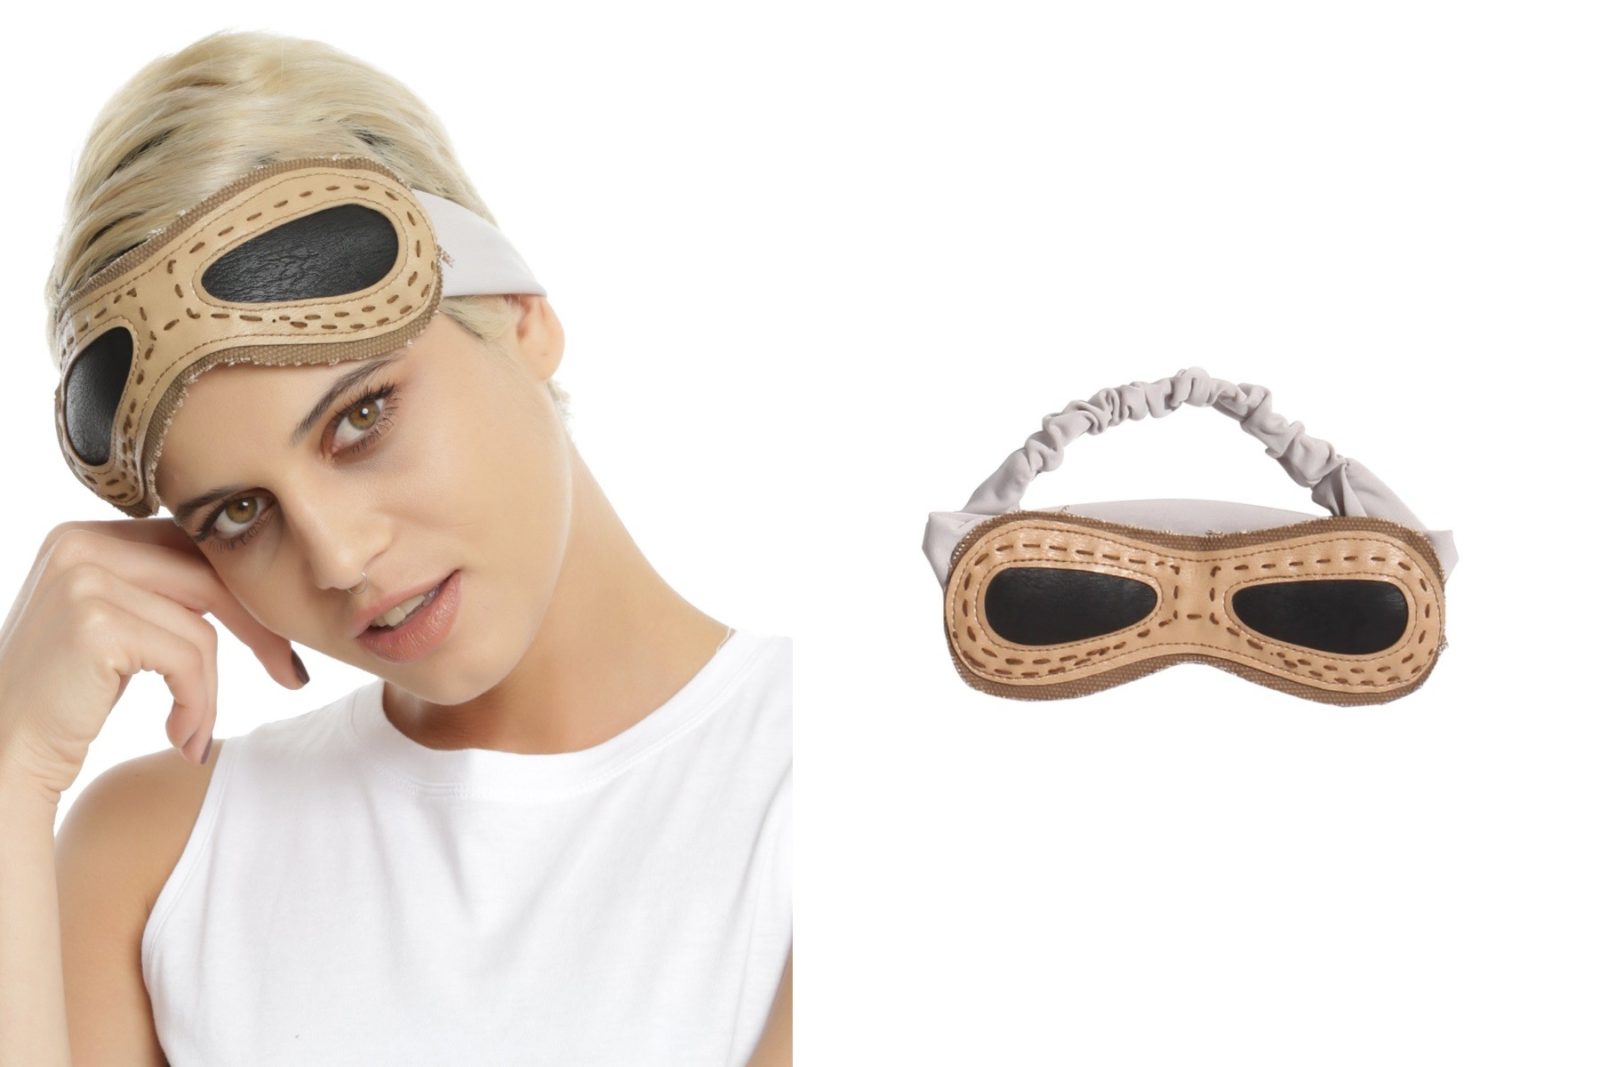 Rey goggles headband available at Hot Topic